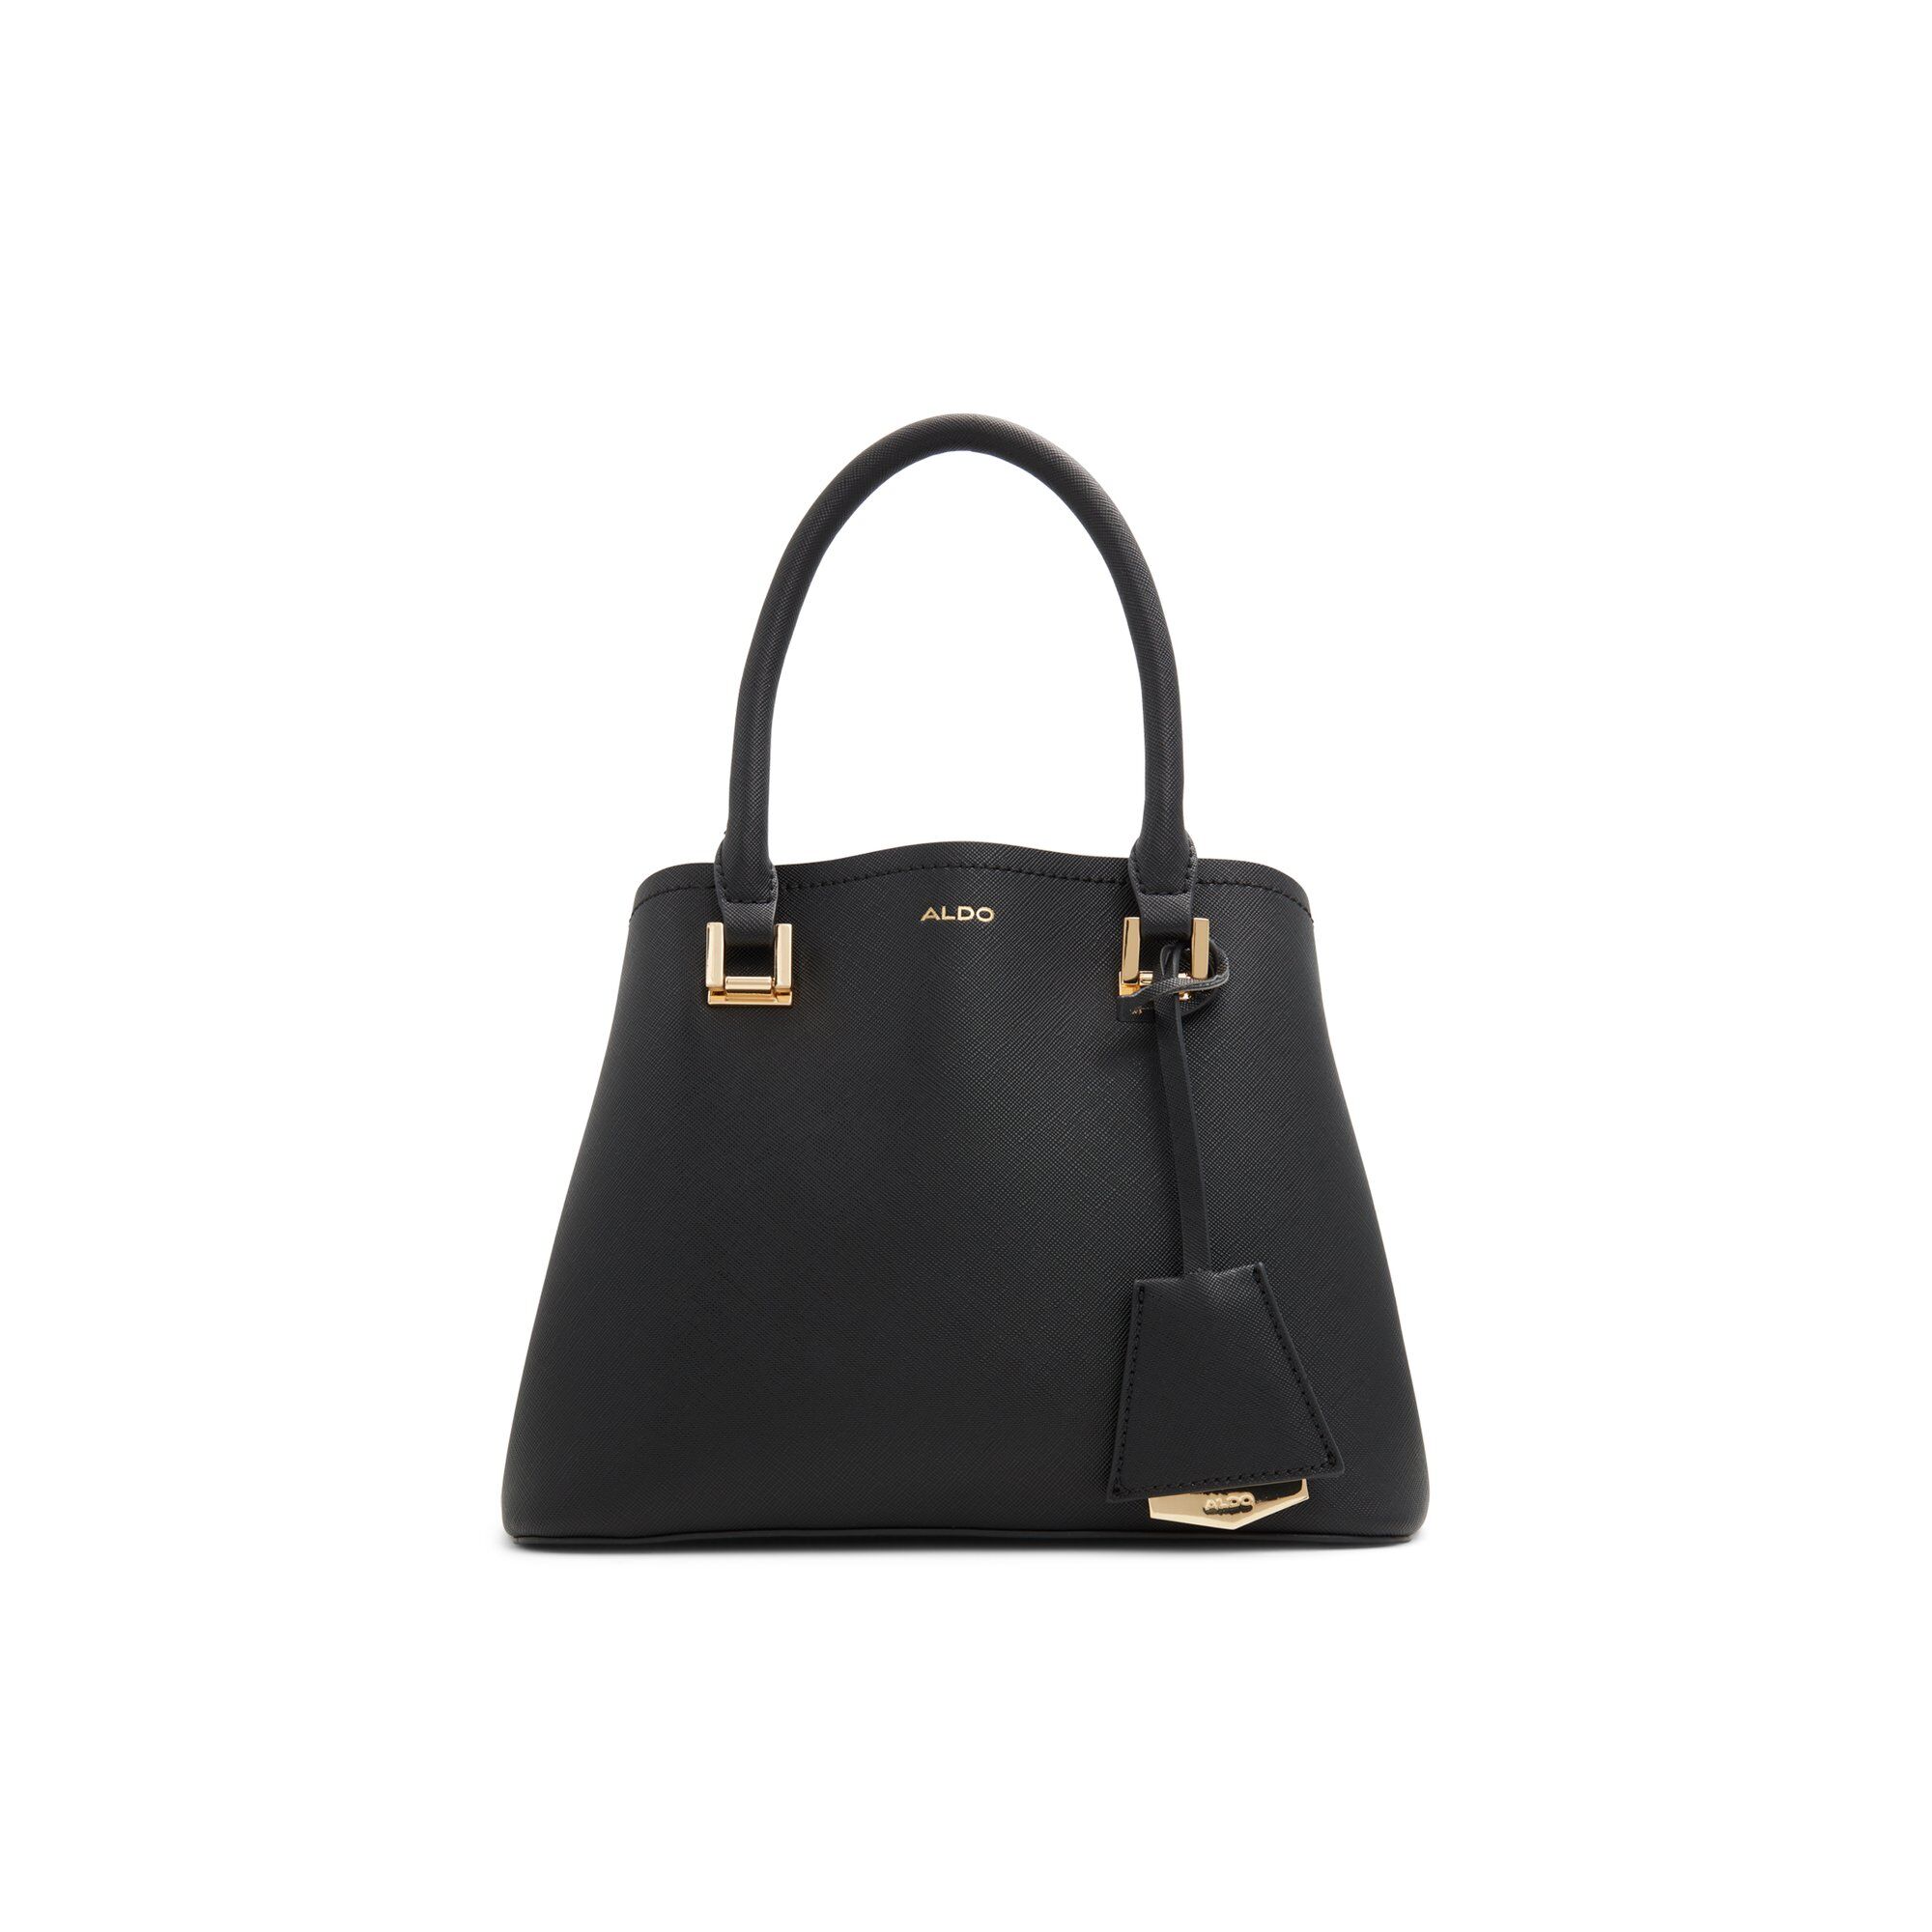 ALDO Anneterielx - Women's Tote Handbag - Black